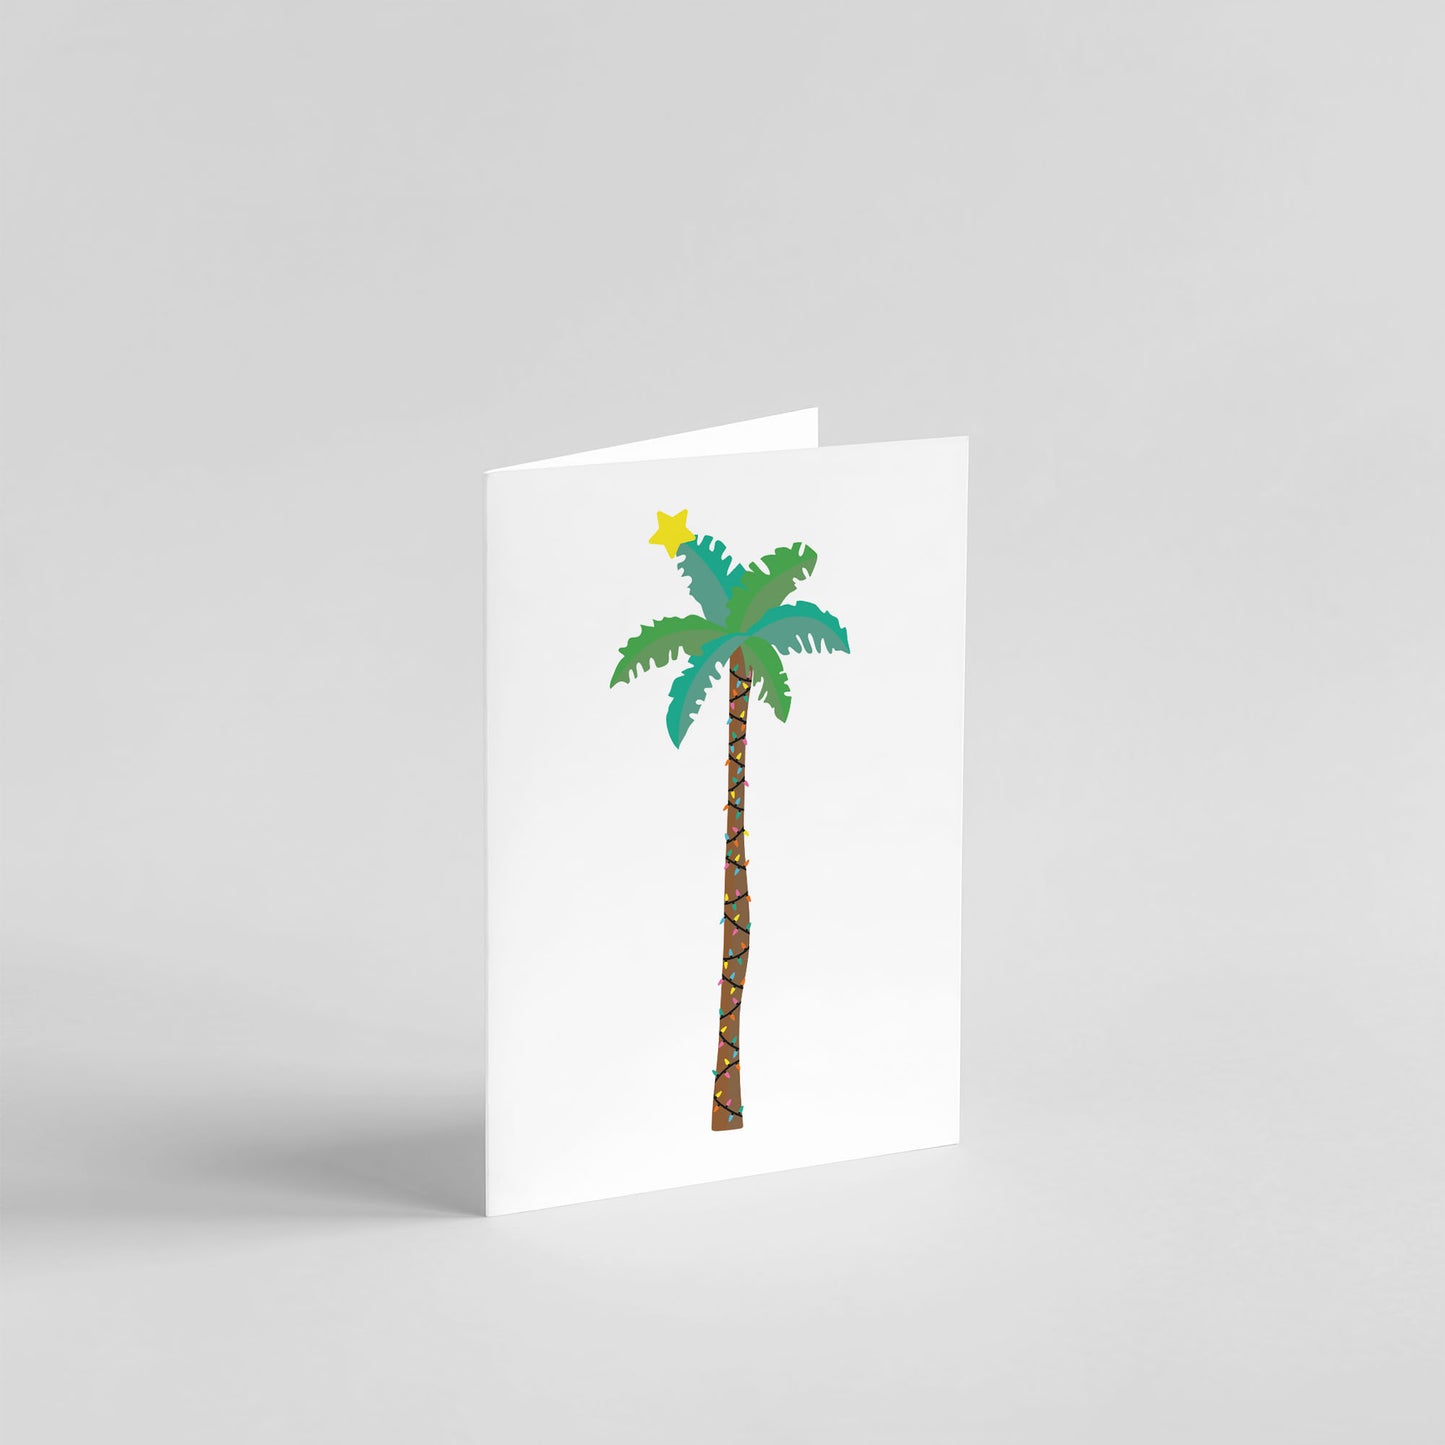 Christmas Palm Tree Card